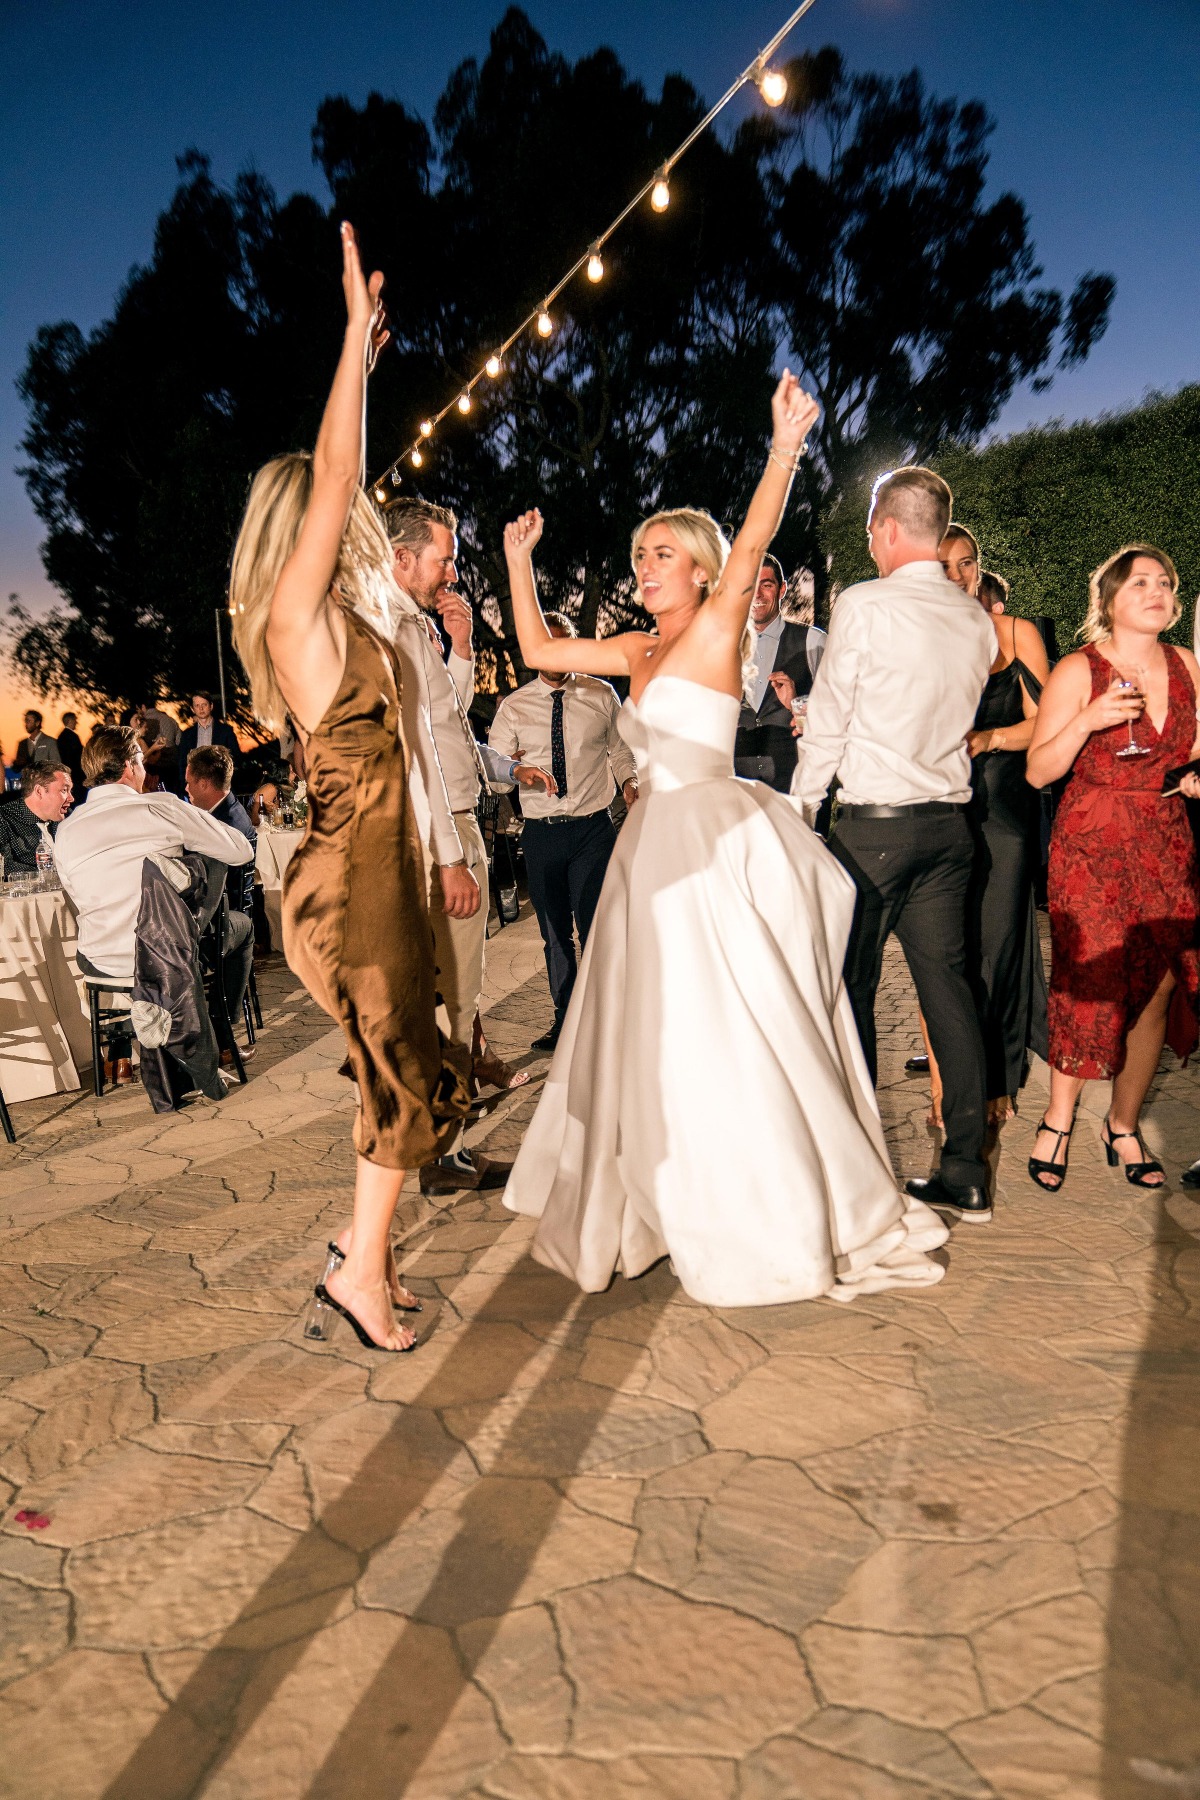 Bride dancing with guests